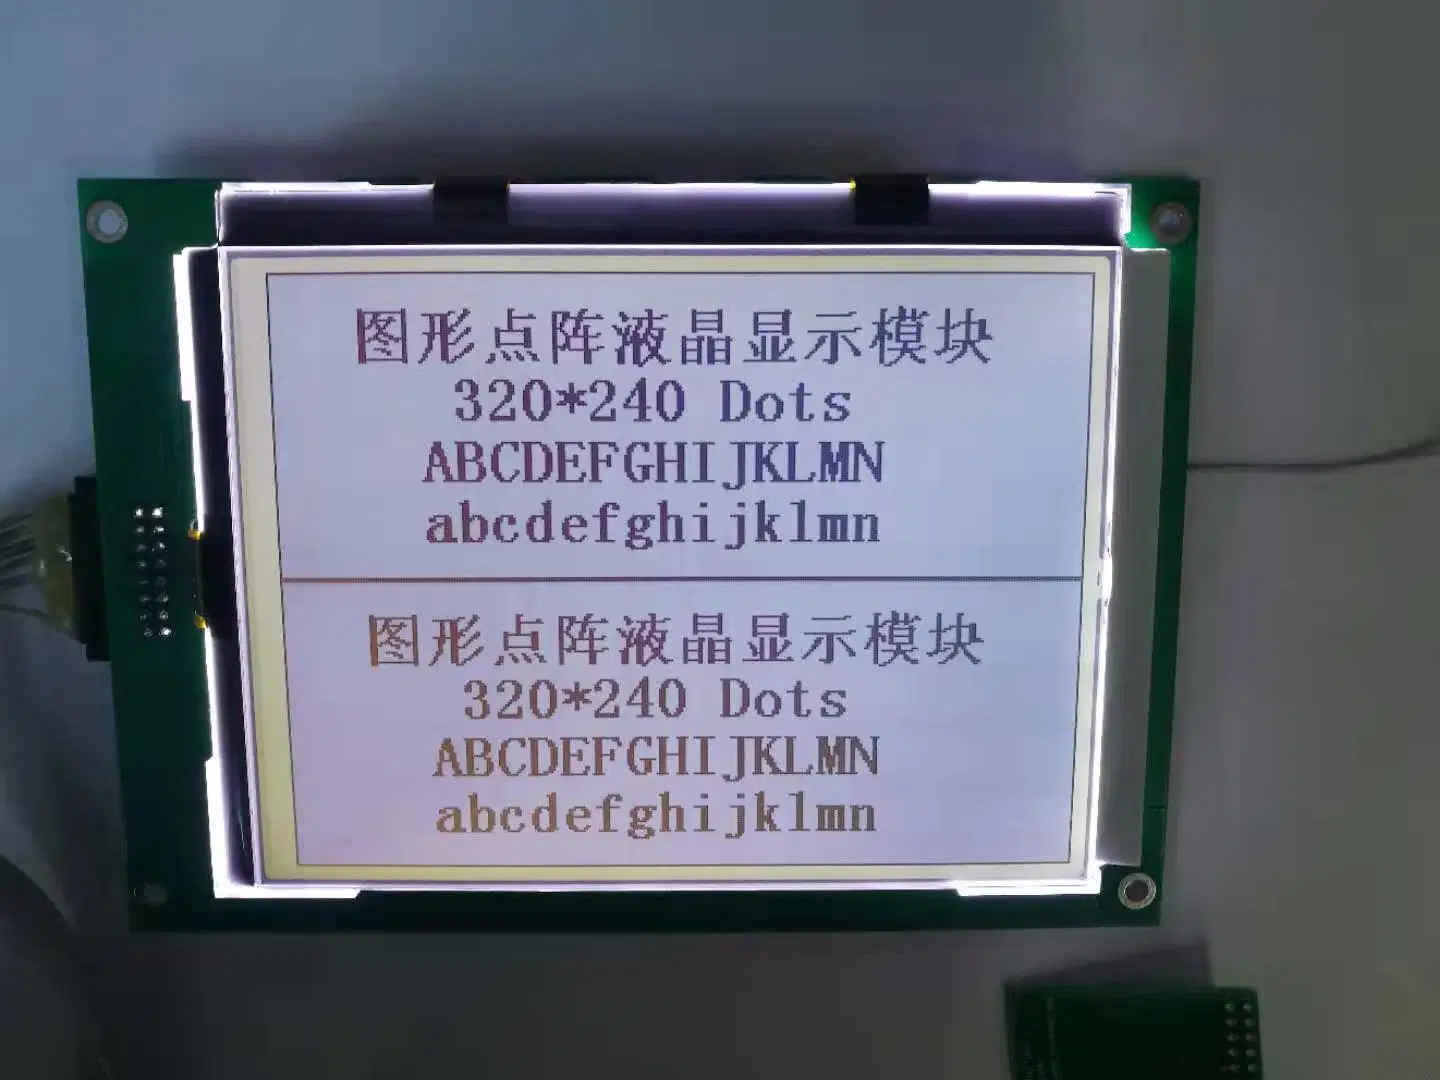 Customized Size Connector Rtp FSTN Positive Monochrome Panel LCD Module